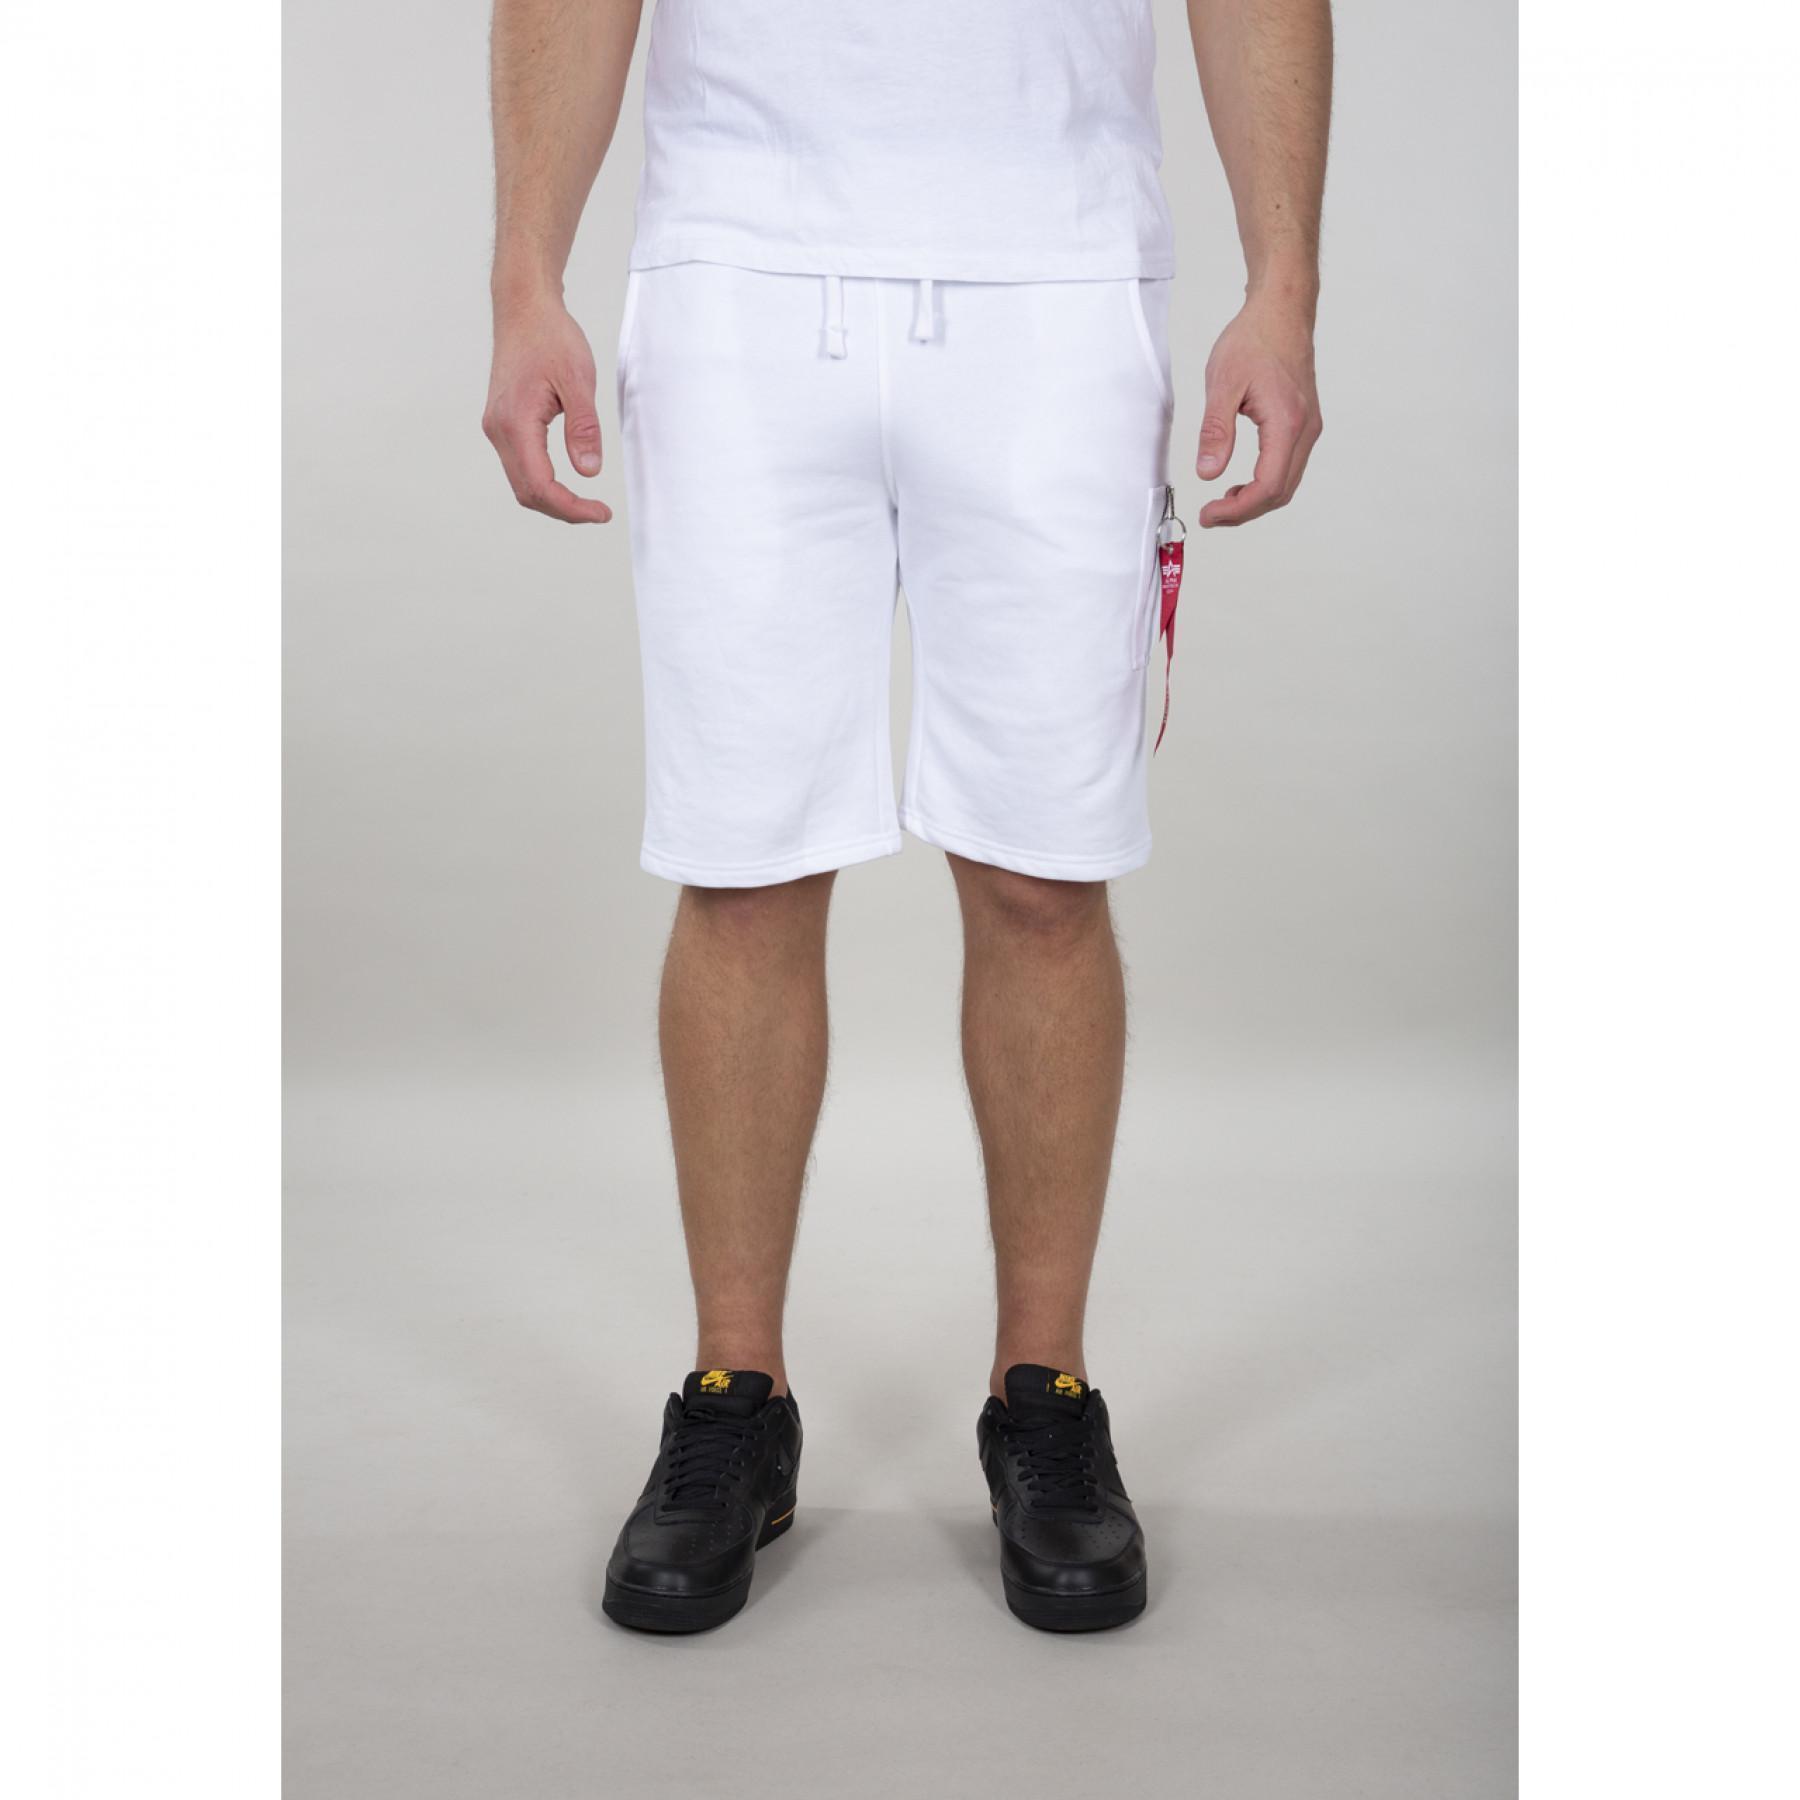 Cargo shorts Alpha Clothing - X-Fit - Industries - Shorts Men